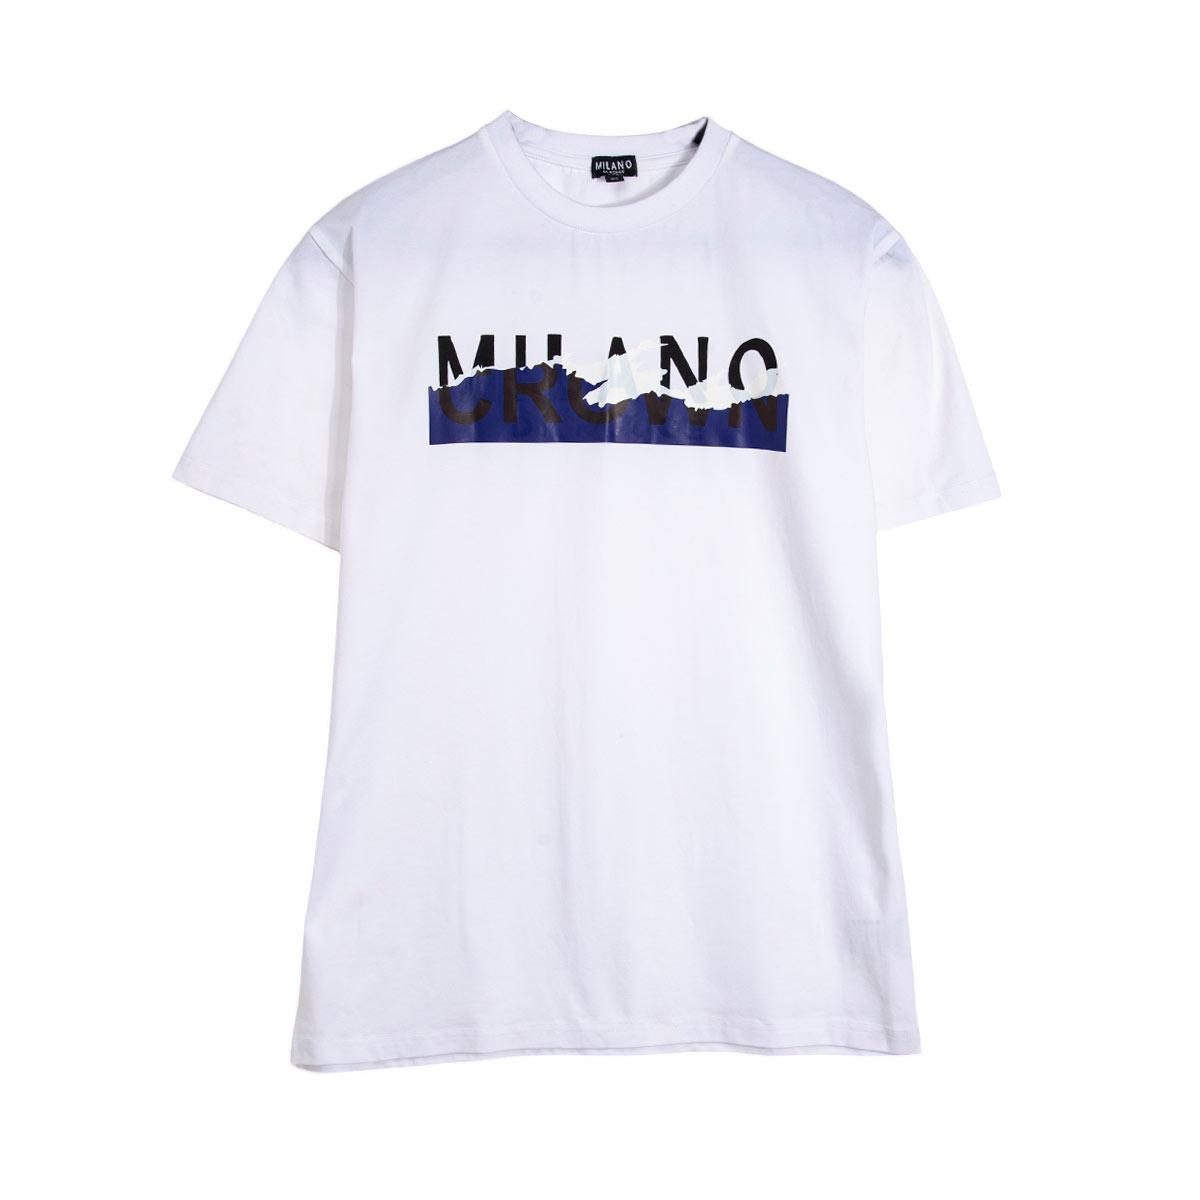 Aung-Crown-white-short-sleeve-t-shirt-for-summer-SFZ-210420-7